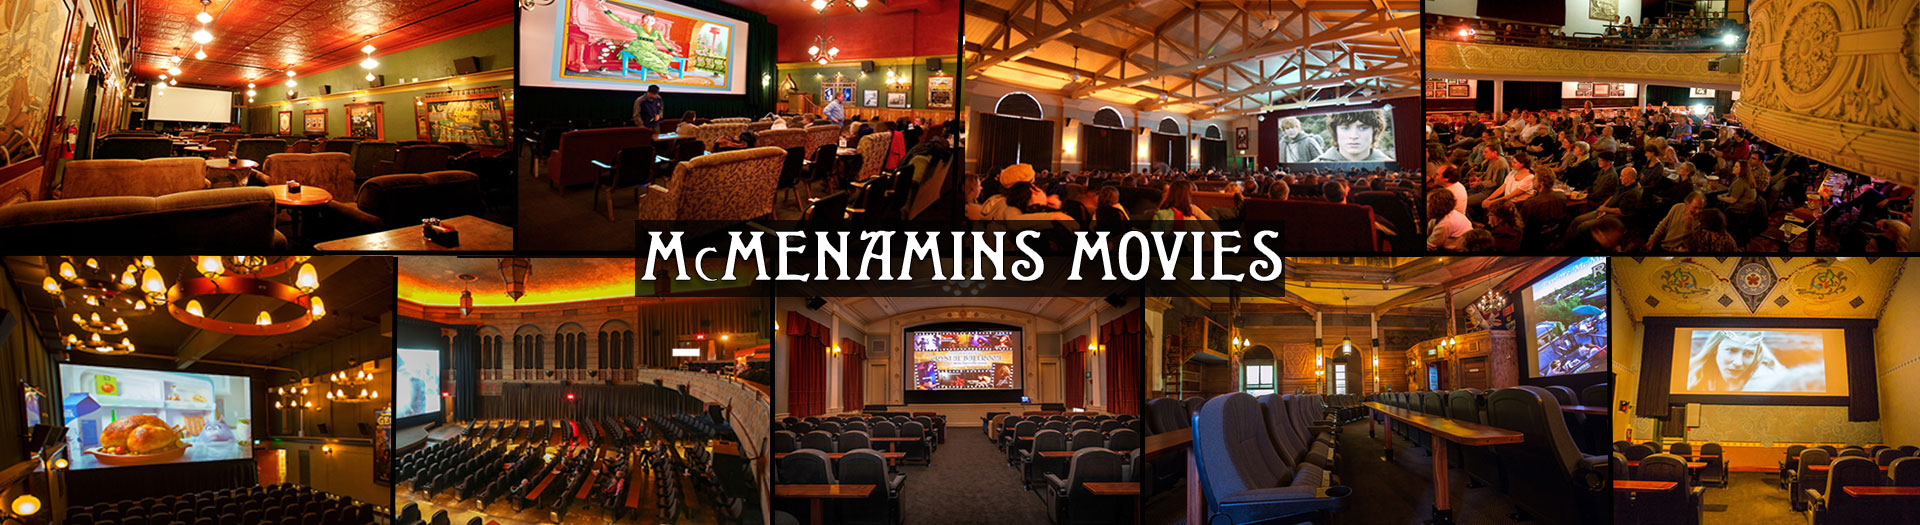 McMenamins Music, Movies & More McMenamins